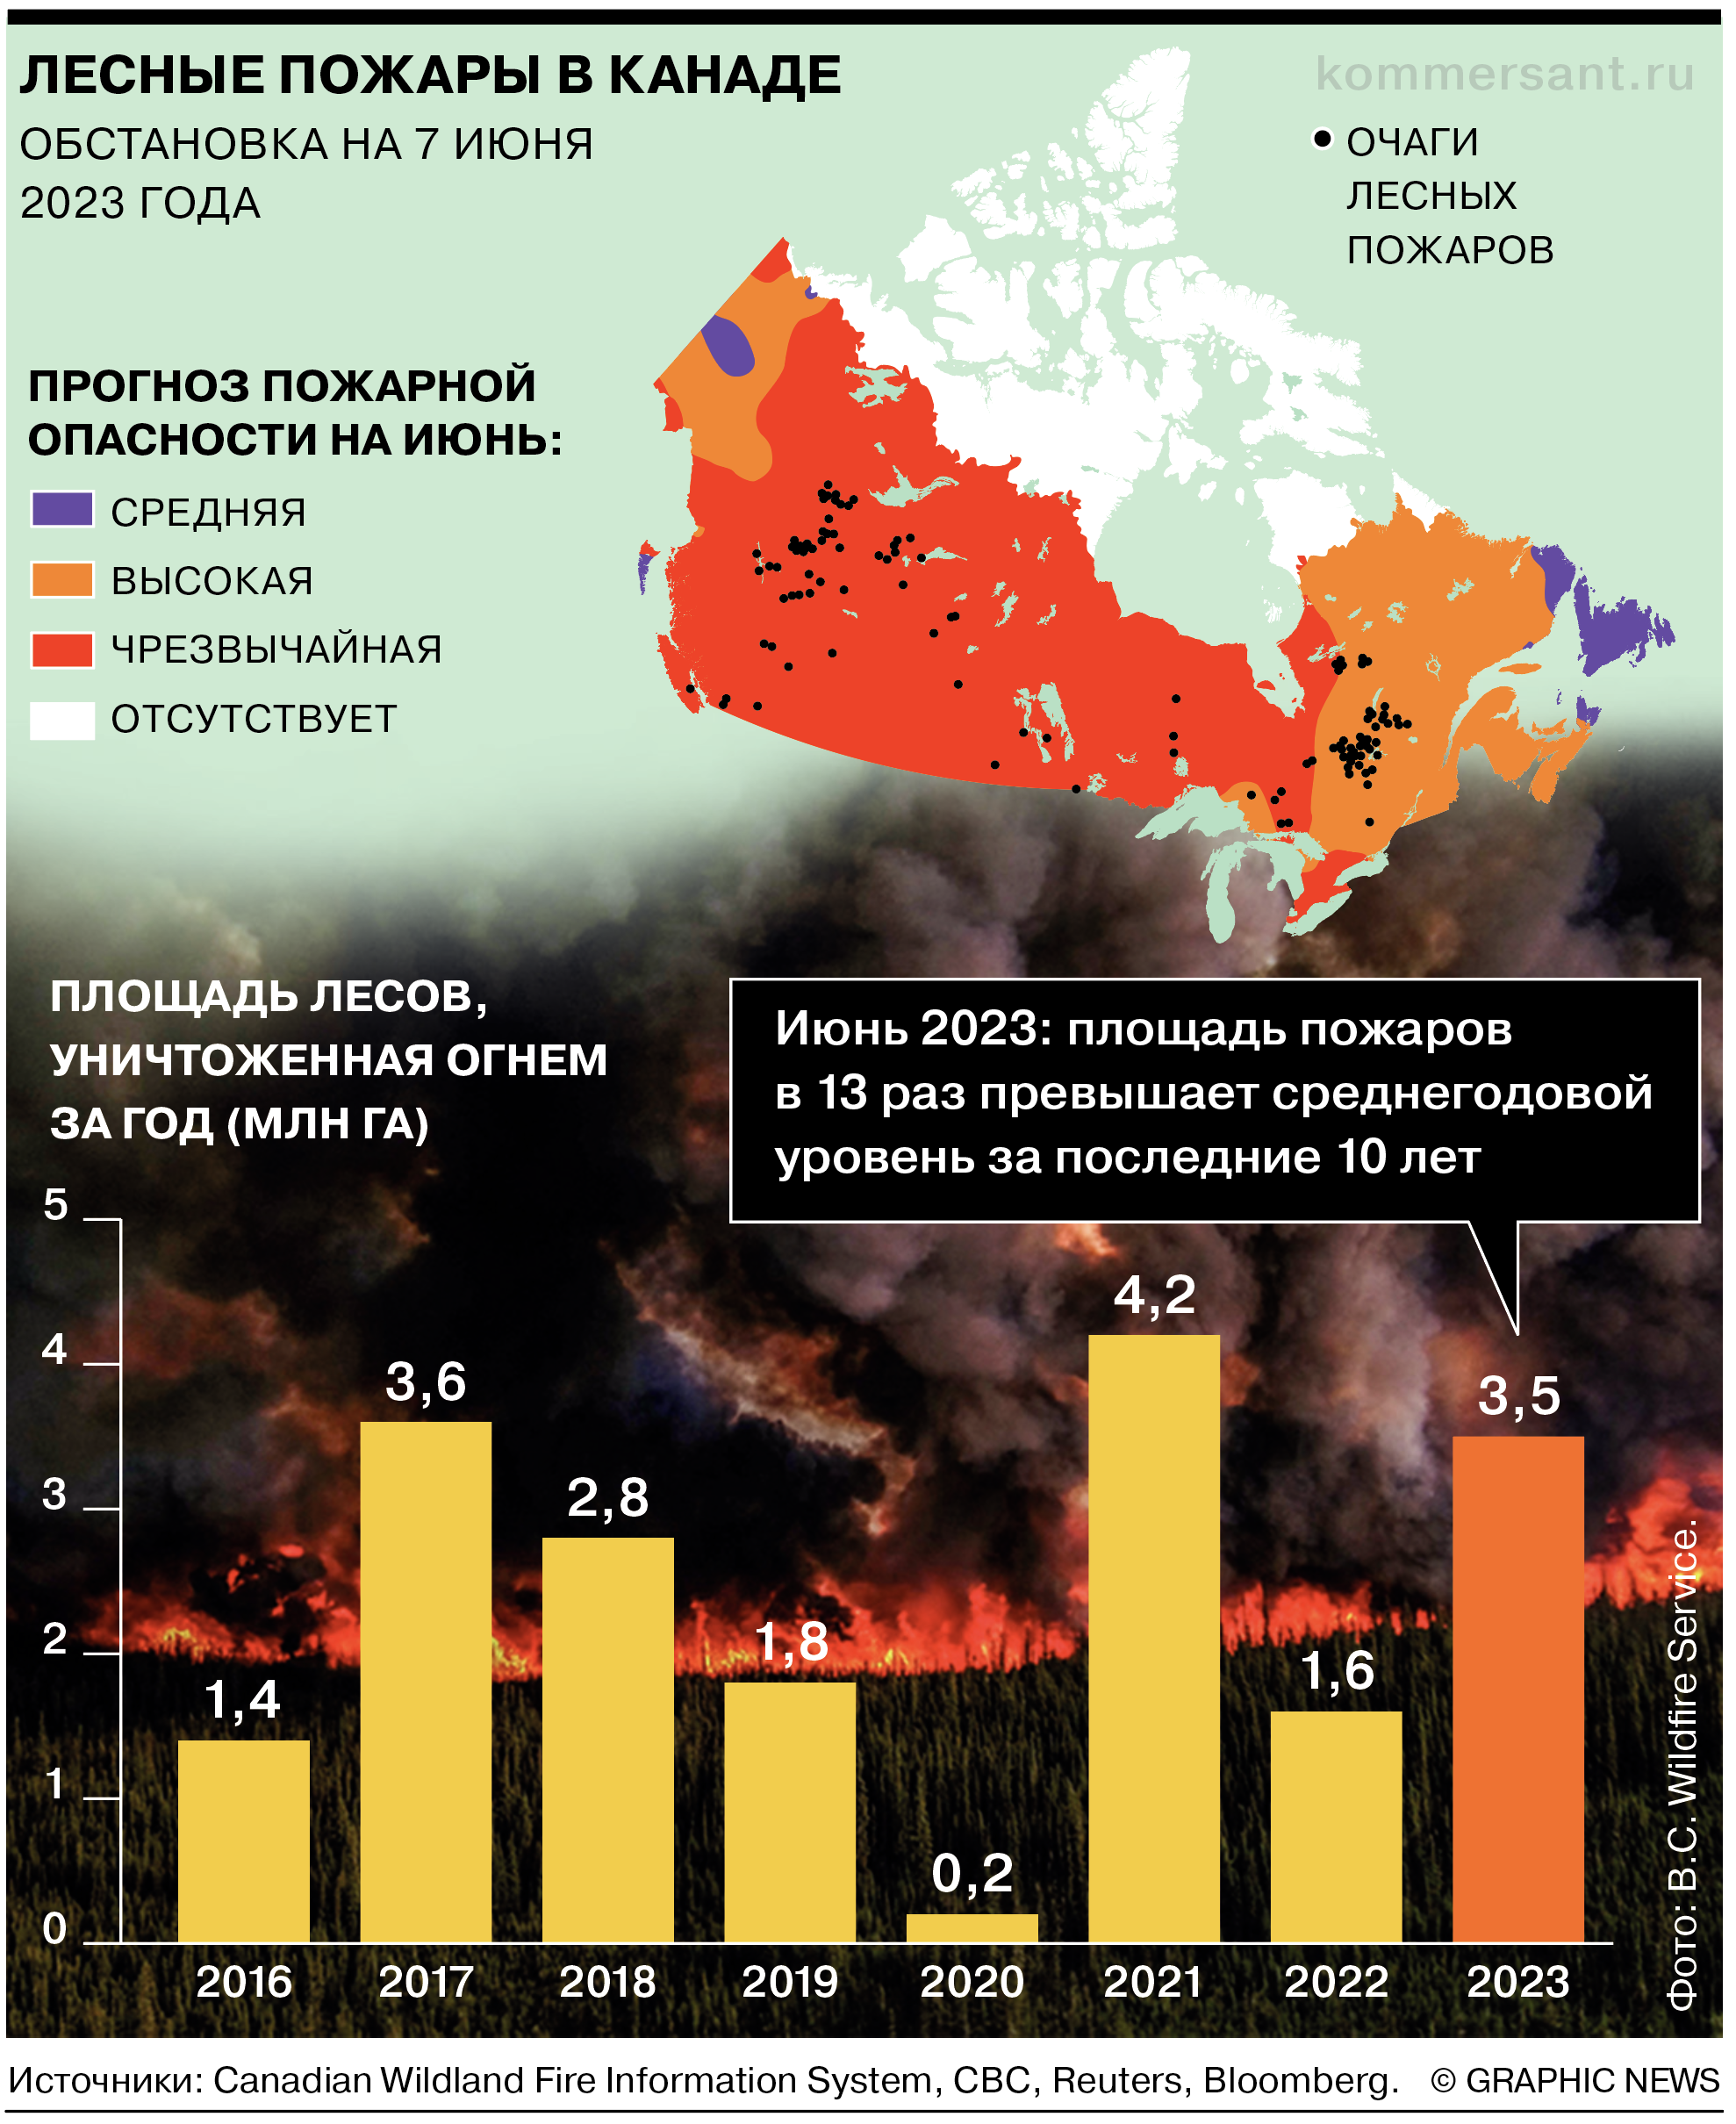 Пожароопасная ситуация в Канаде - Коммерсантъ